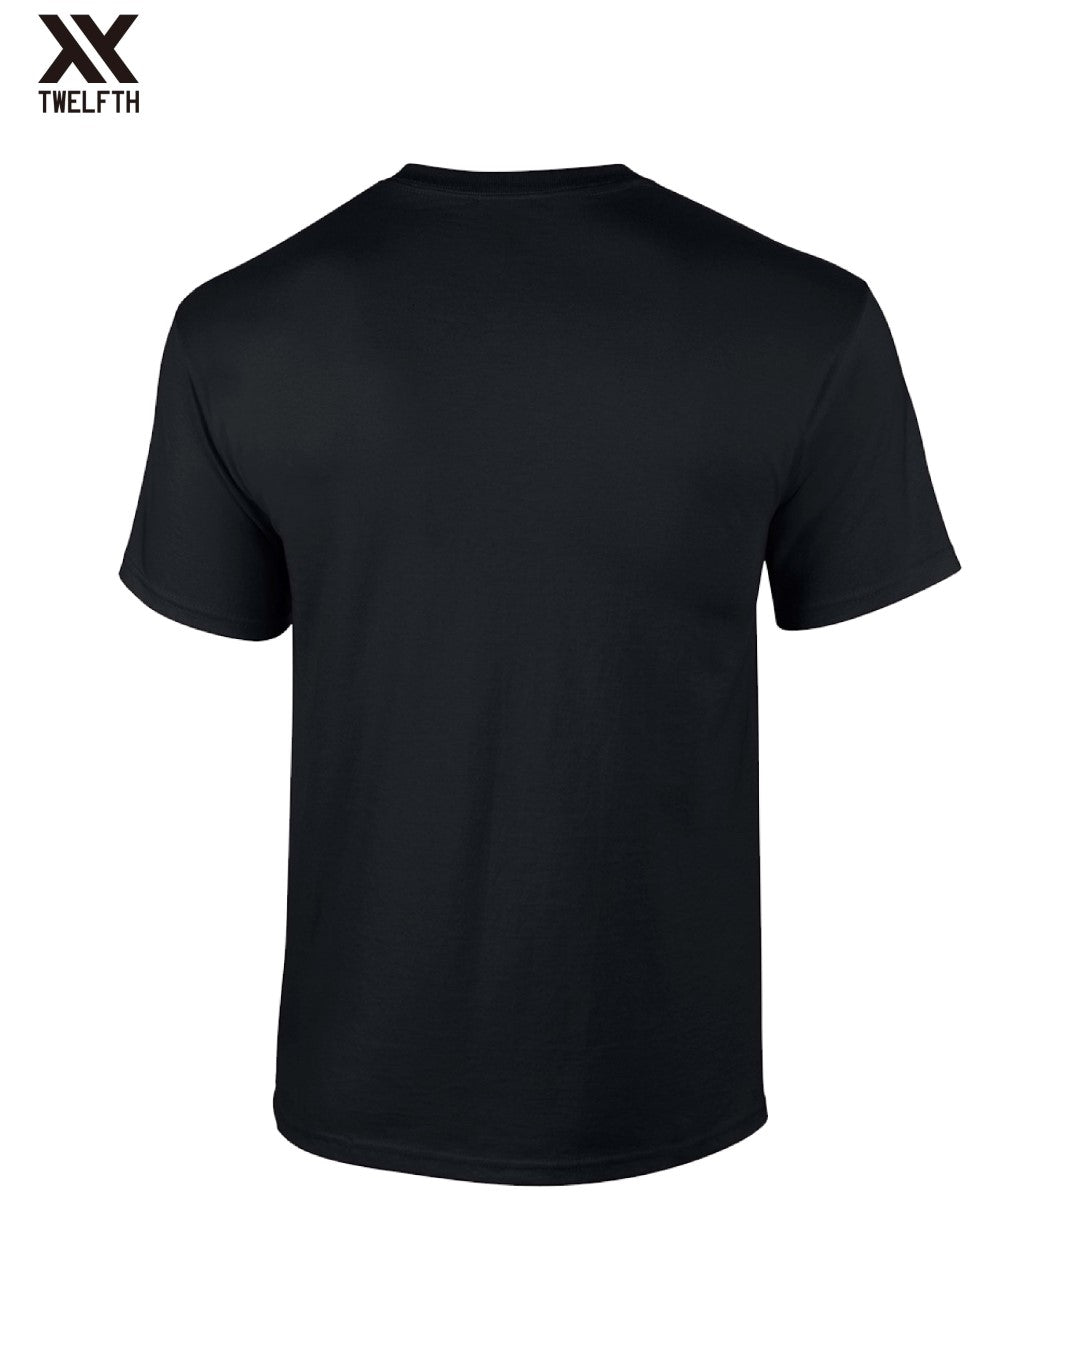 CRISTIANO RONALDO T-Shirt - Mens